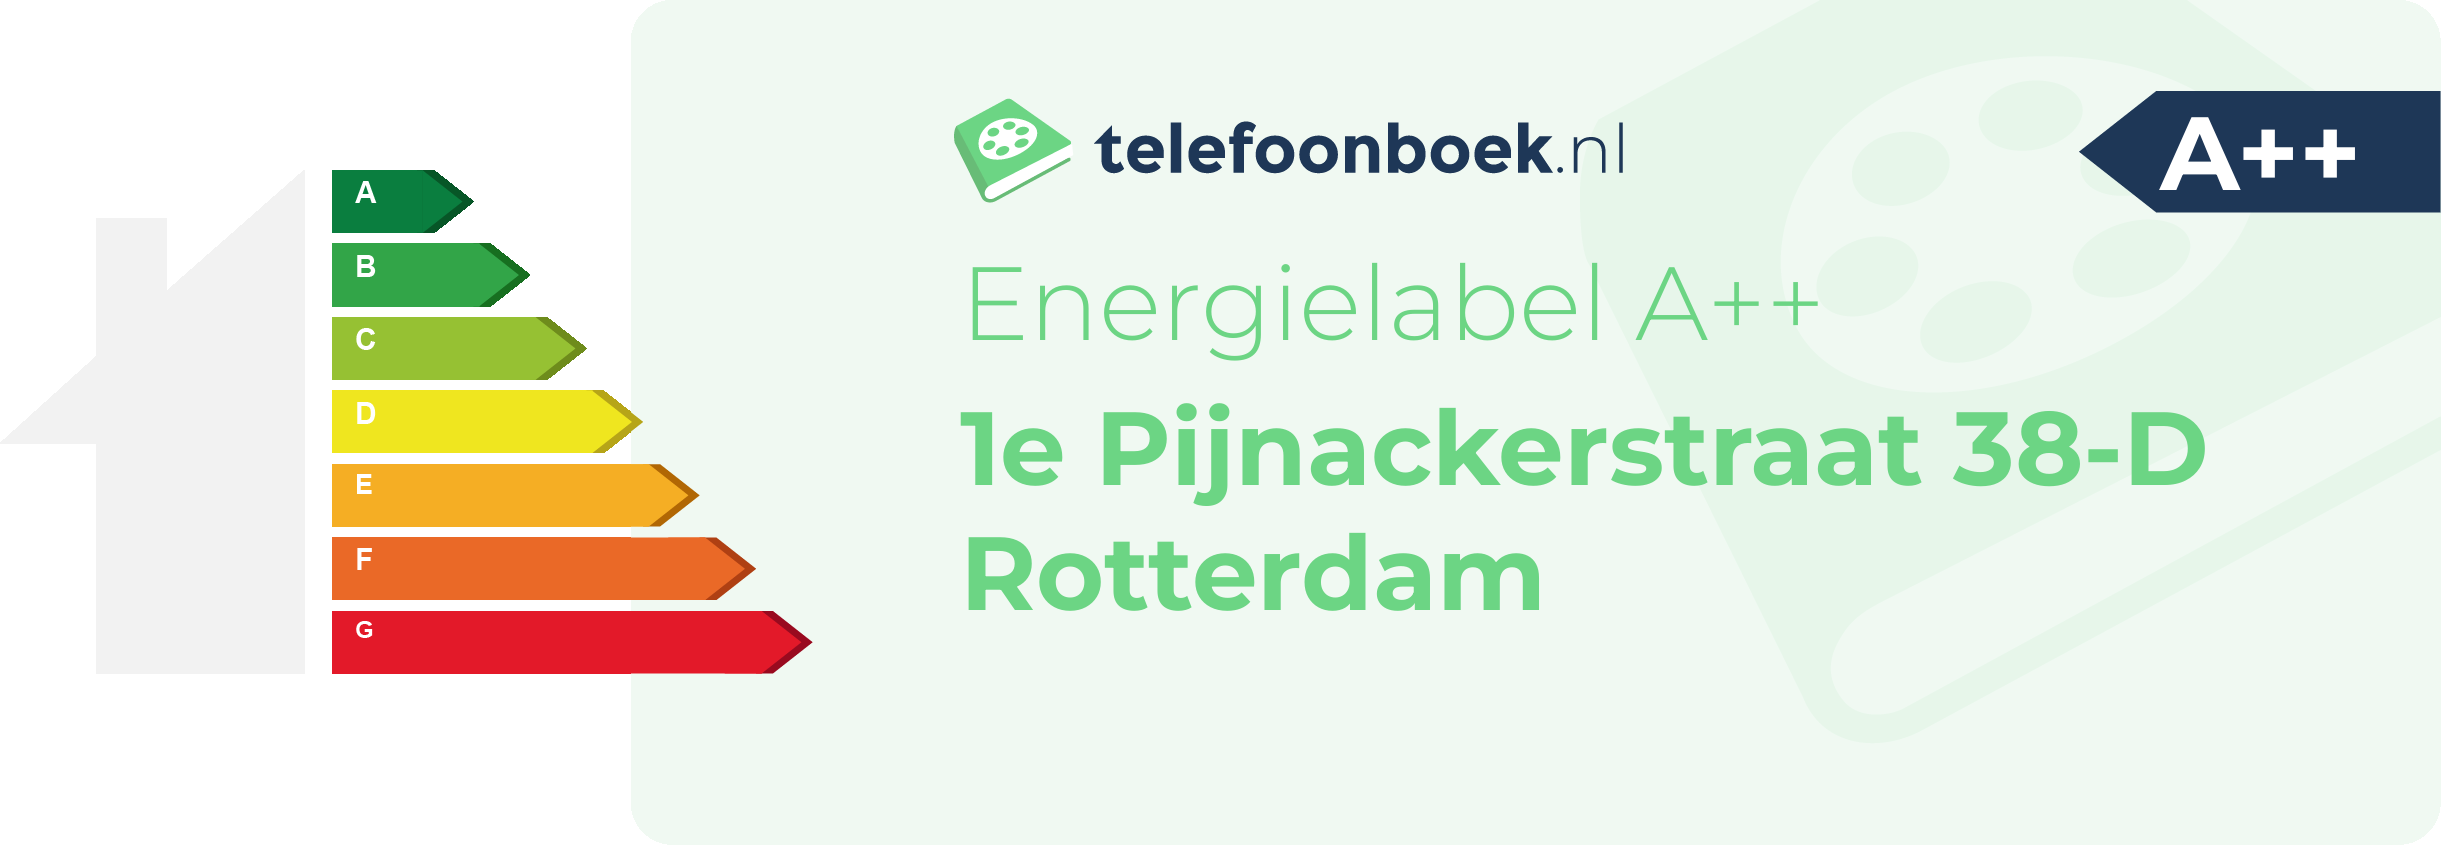 Energielabel 1e Pijnackerstraat 38-D Rotterdam